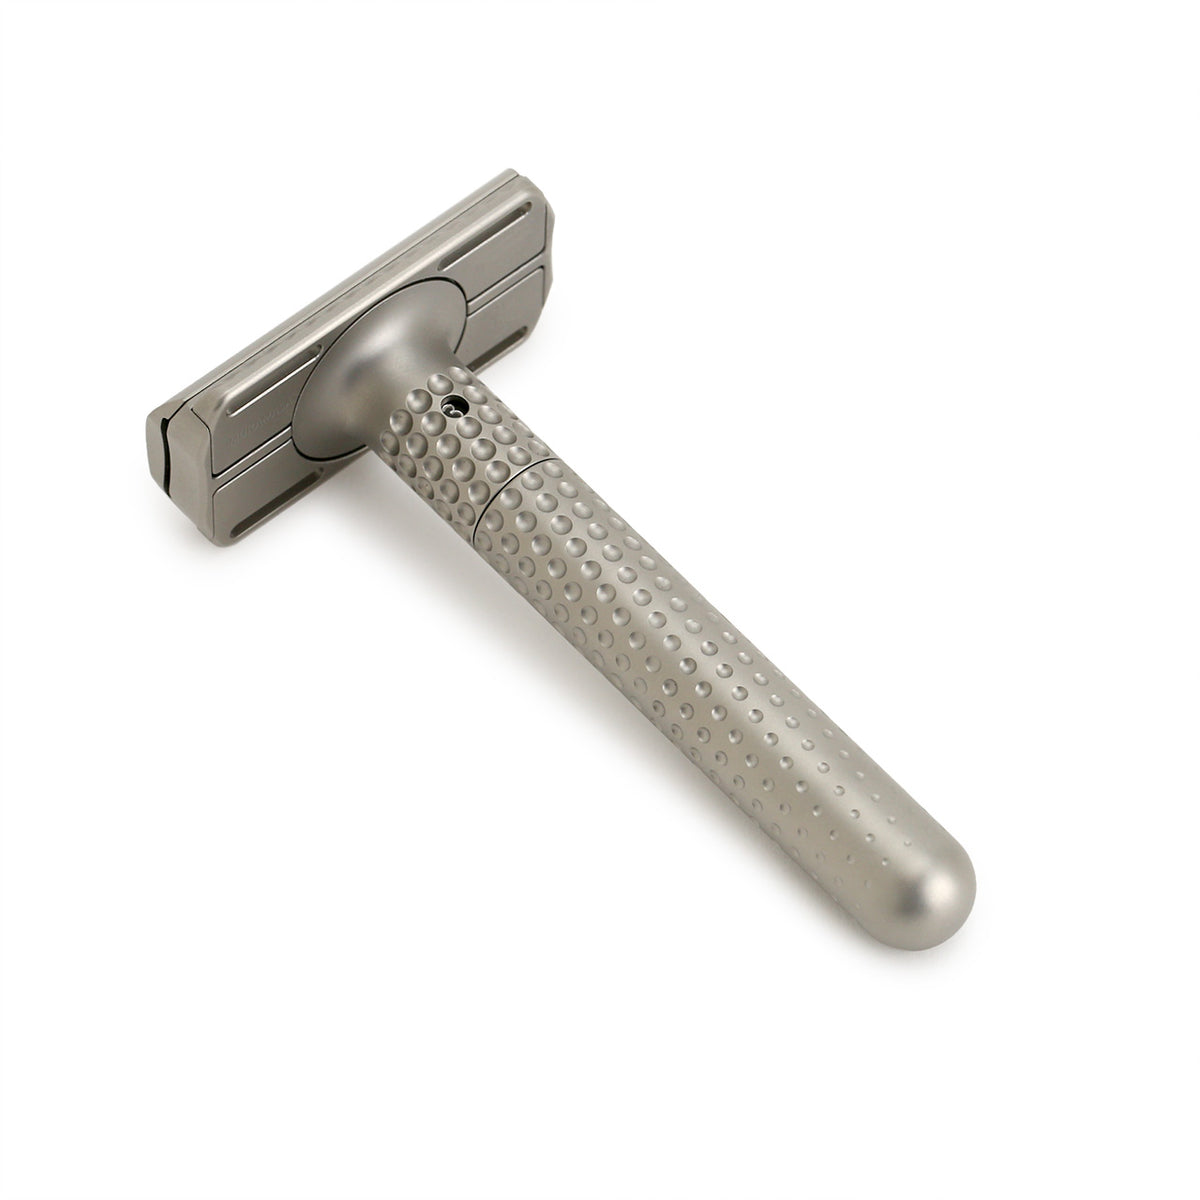 Tatara adjustable razor in matt silver finish with under view